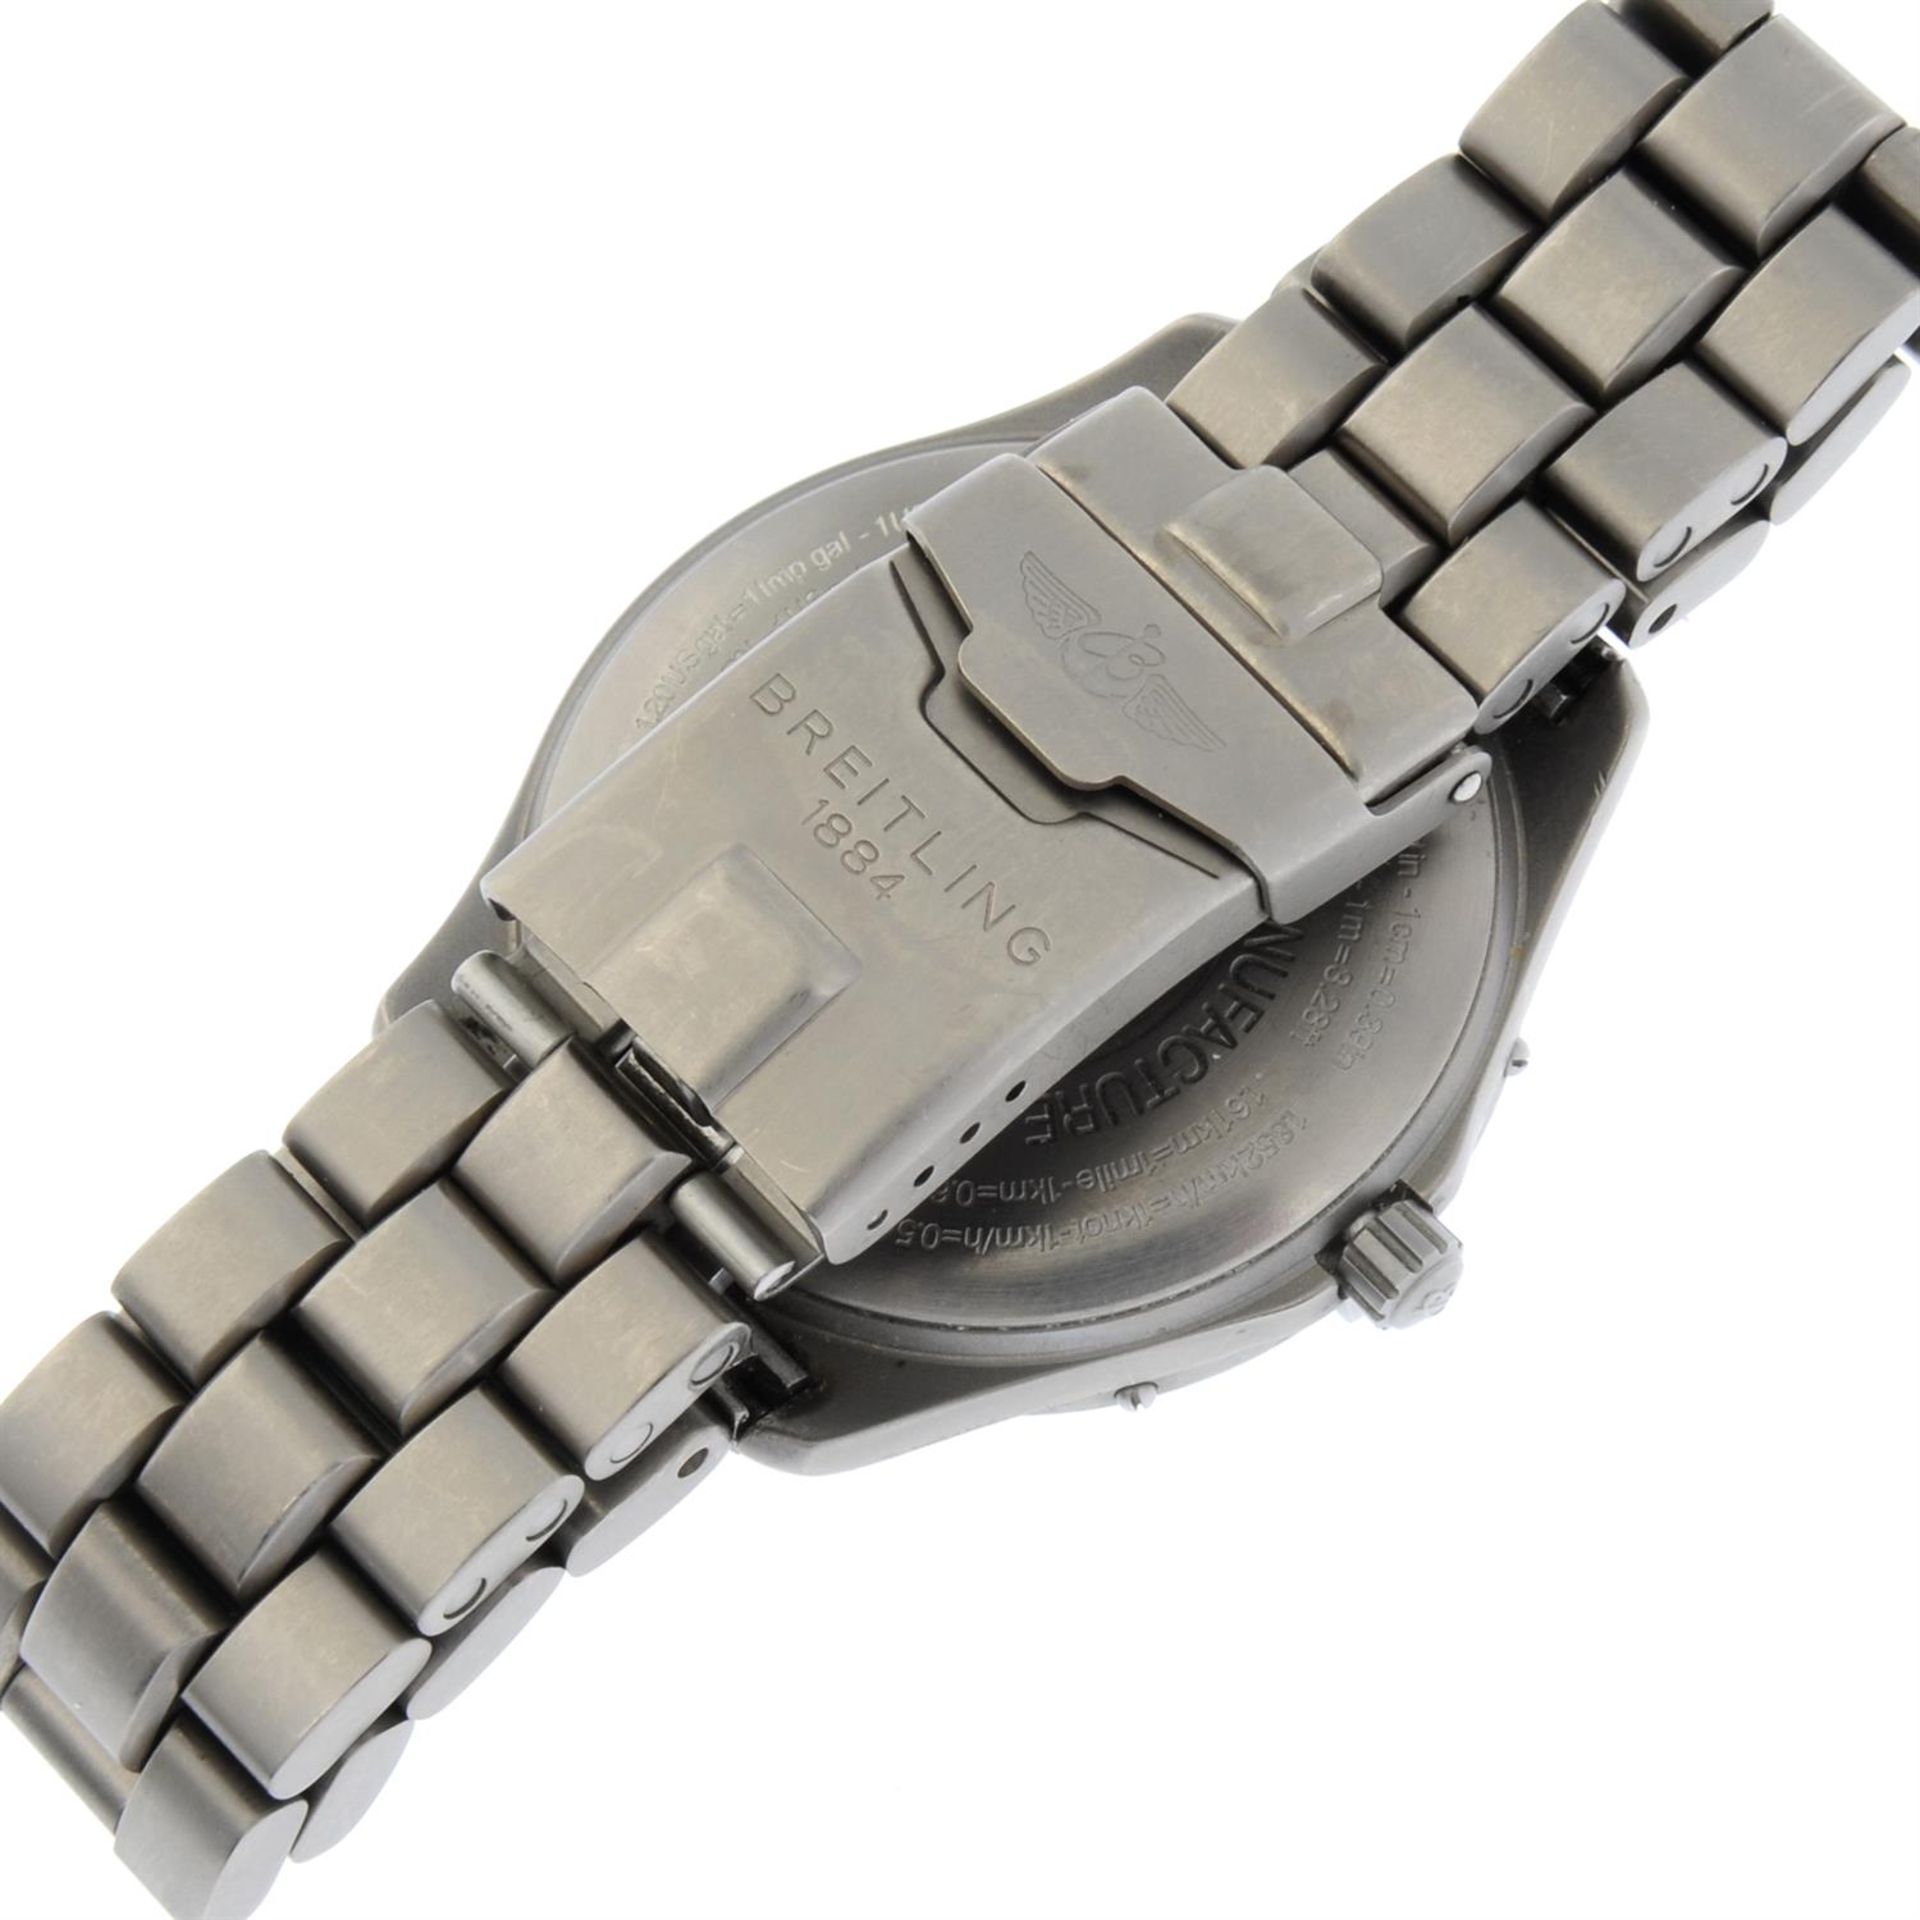 BREITLING - a titanium Aerospace bracelet watch. 40mm. - Image 2 of 6